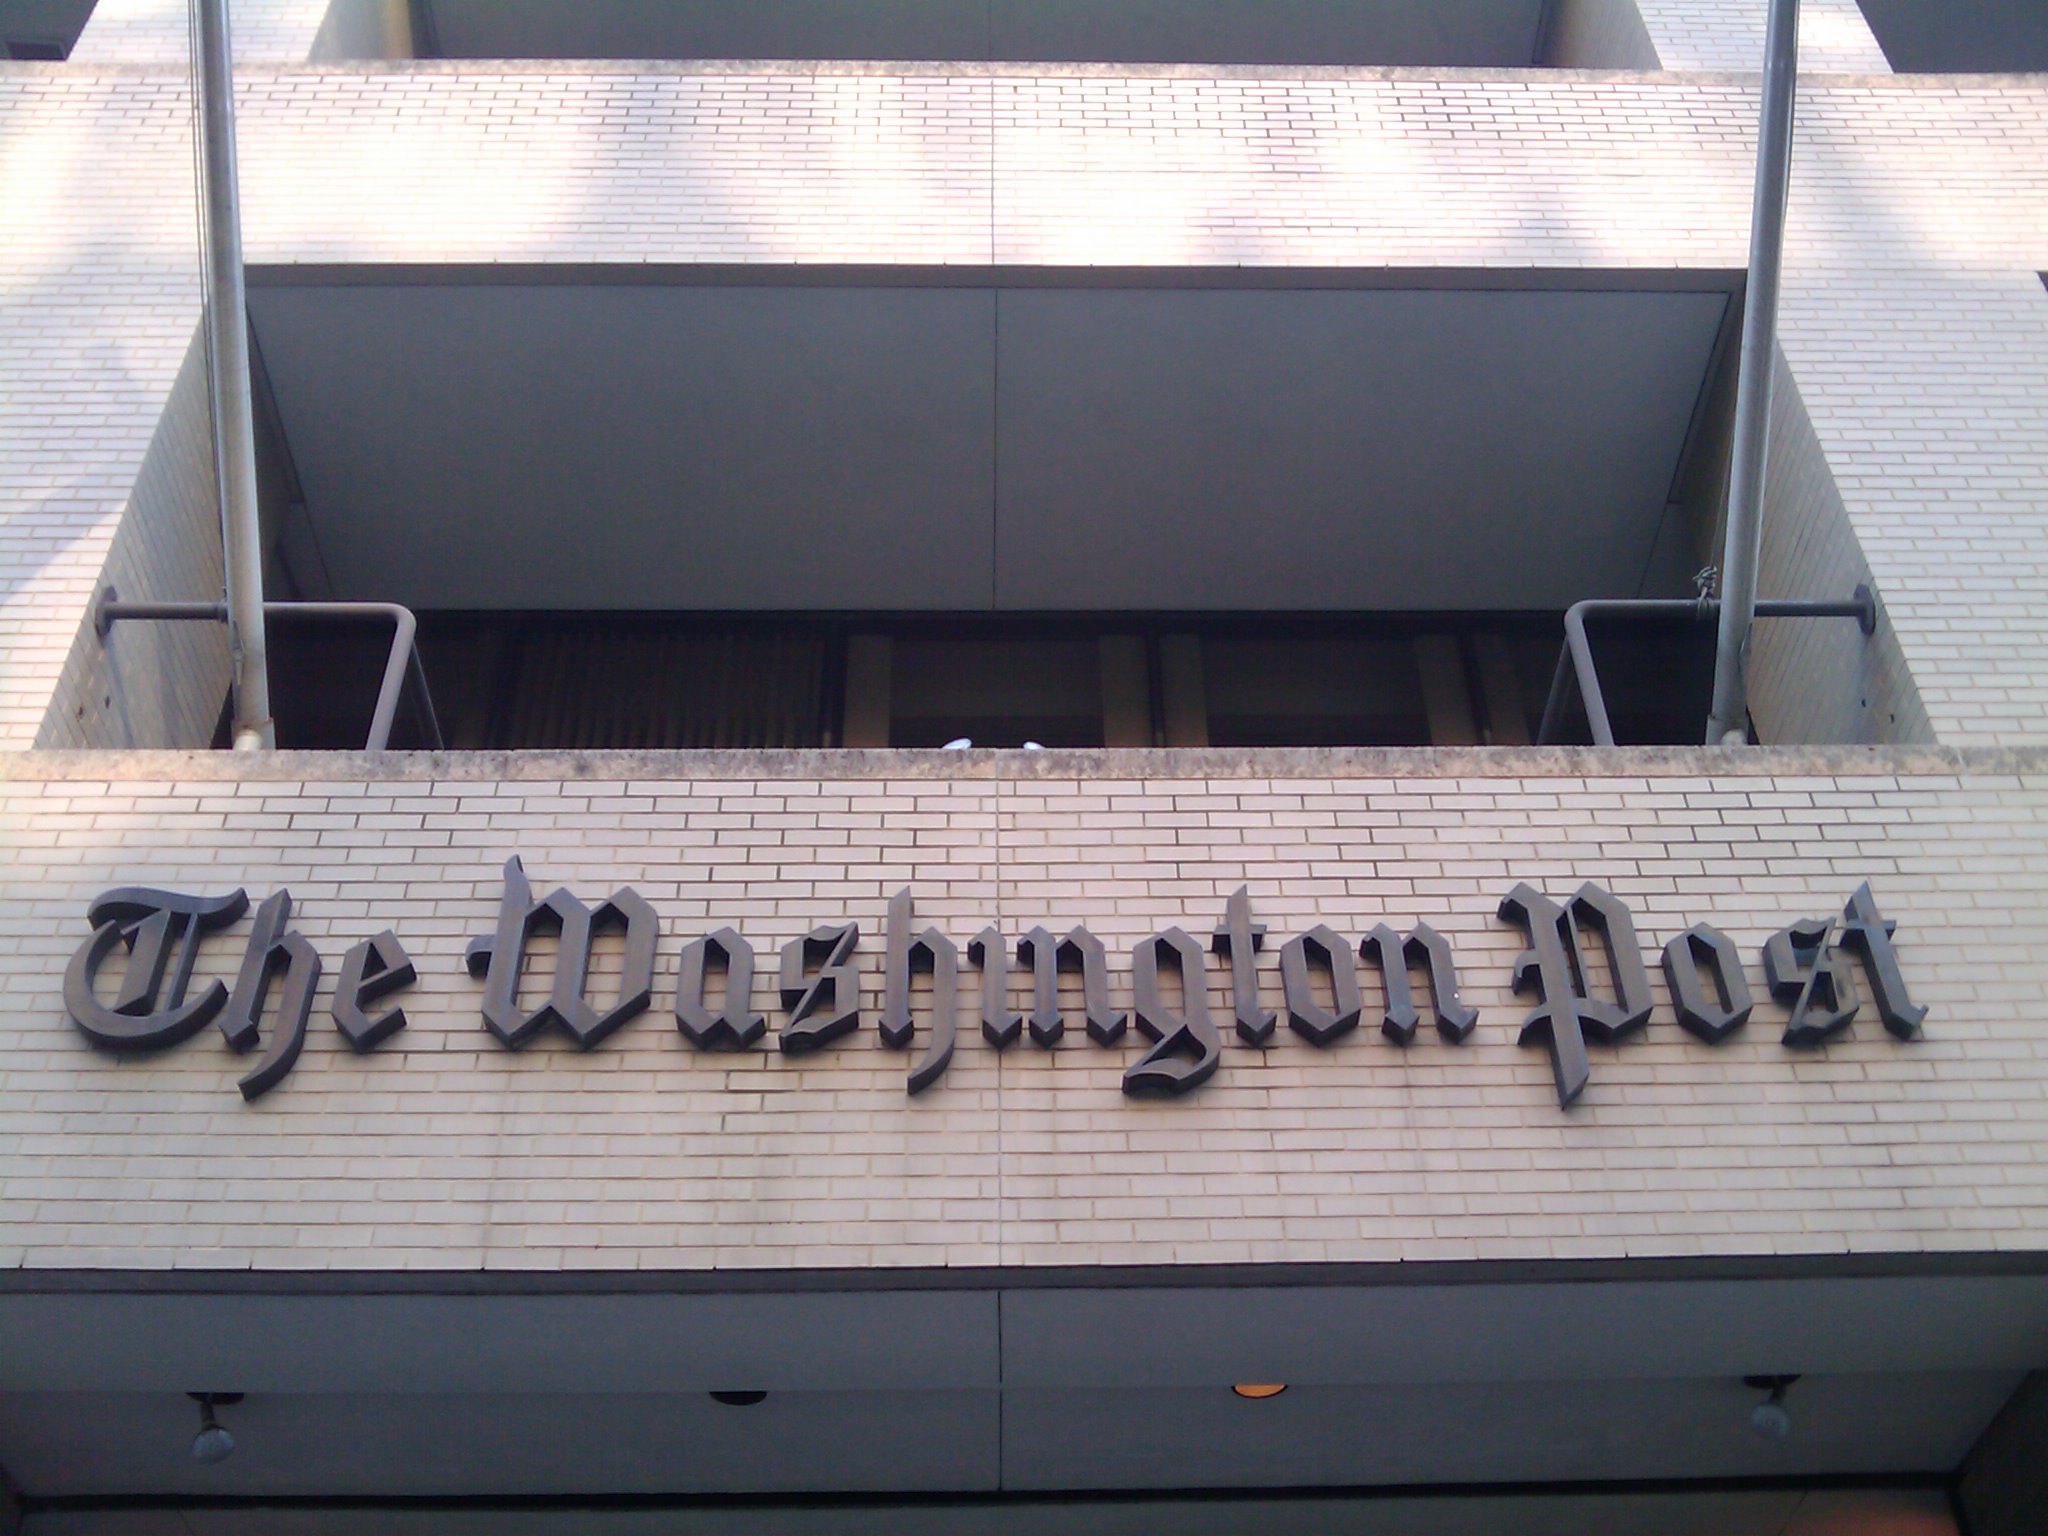 The Washington Post offices in Washington, D.C.